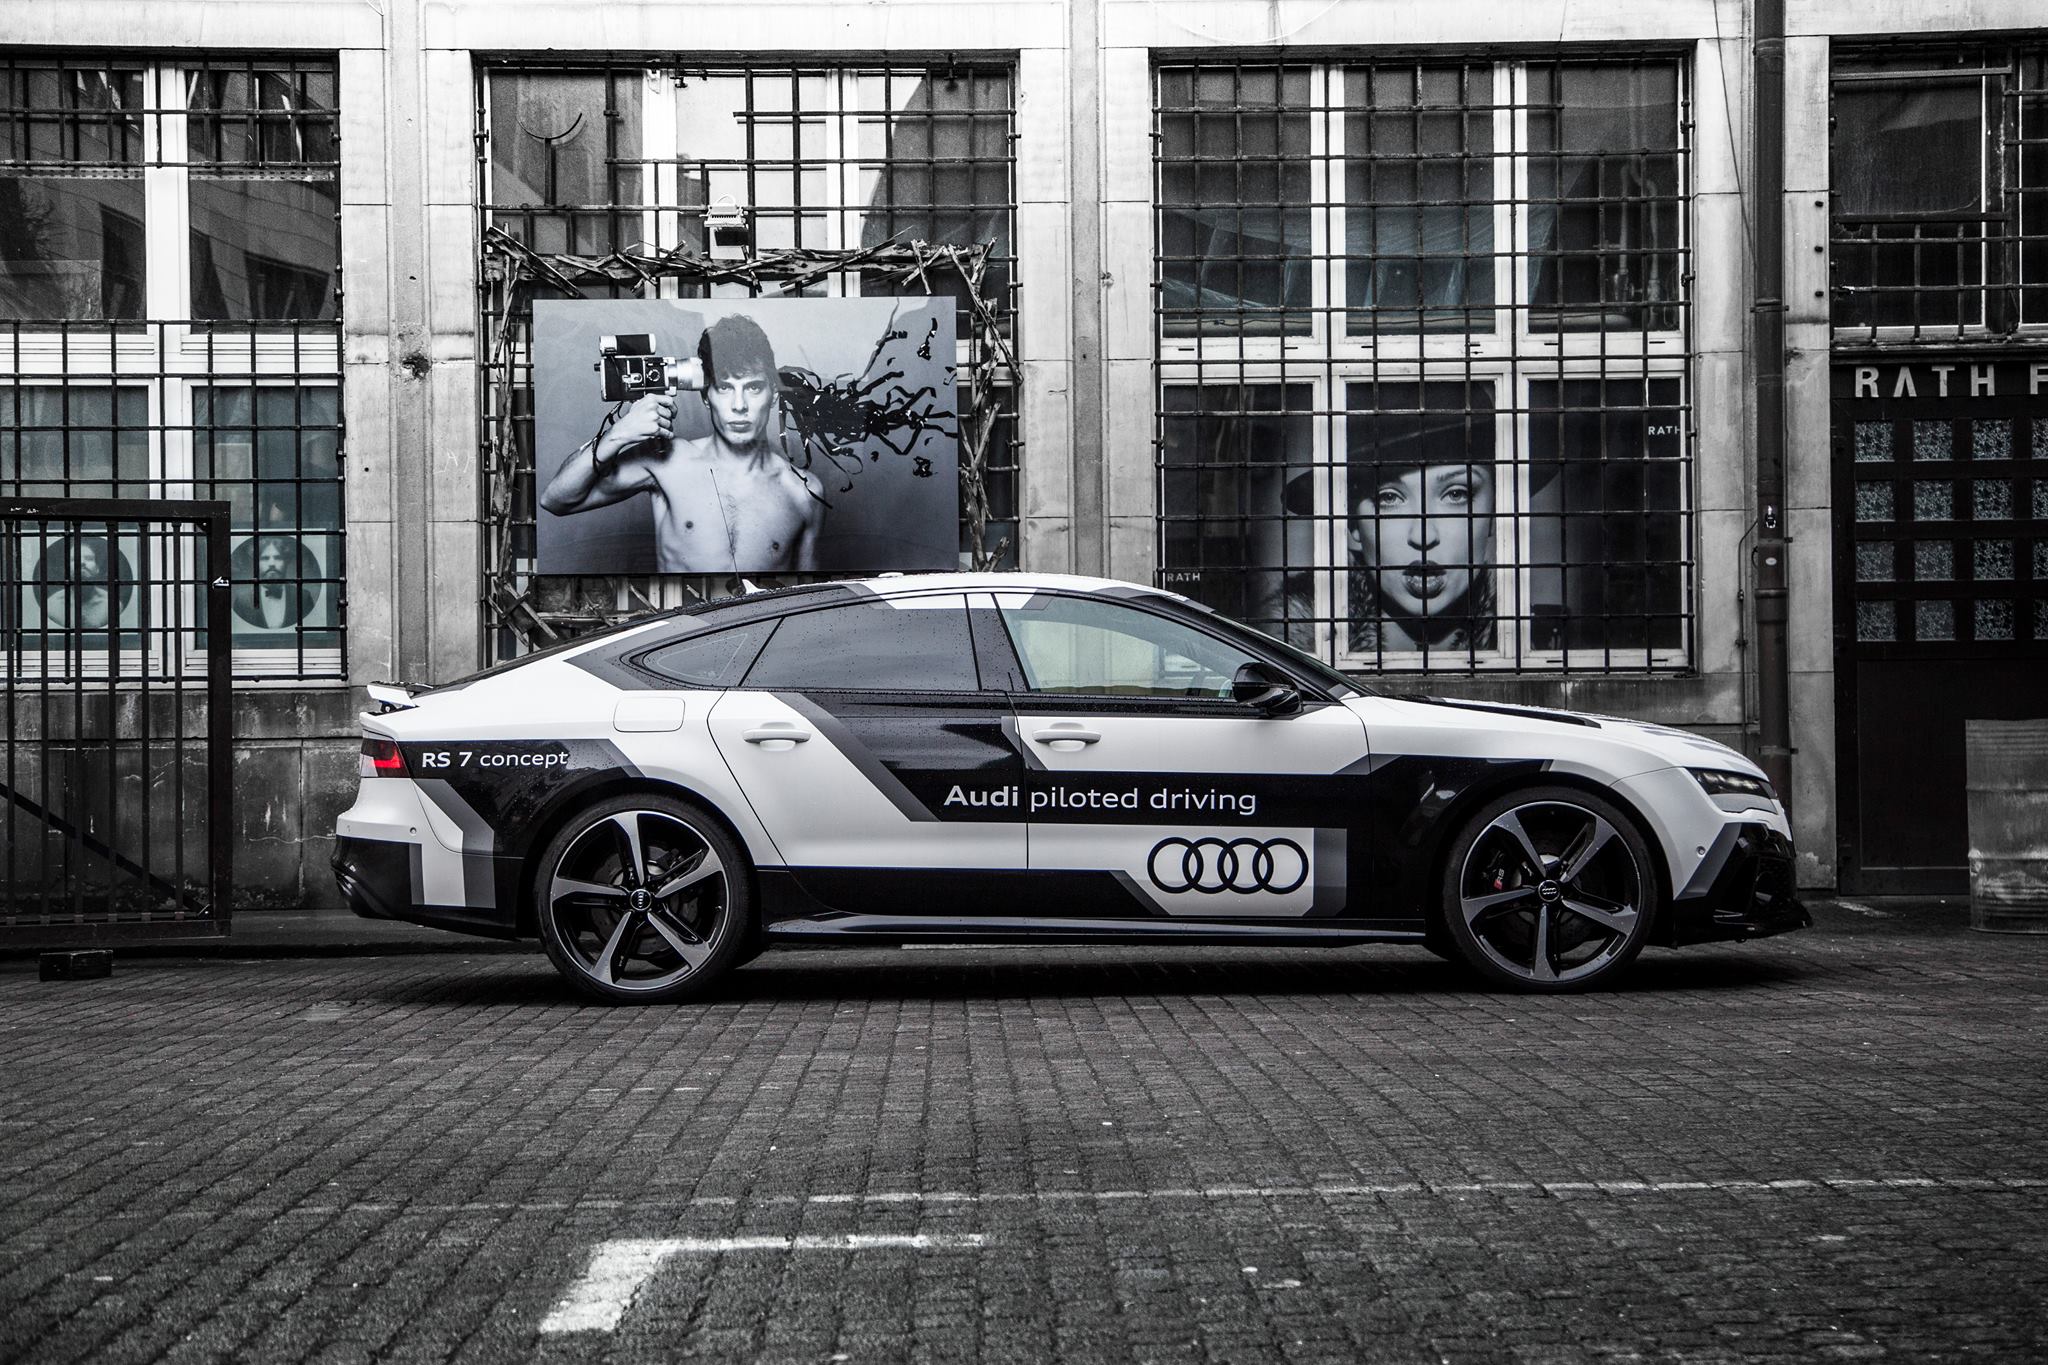 Audi A7 Piloted Driving _ photo (c) RightLightMedia